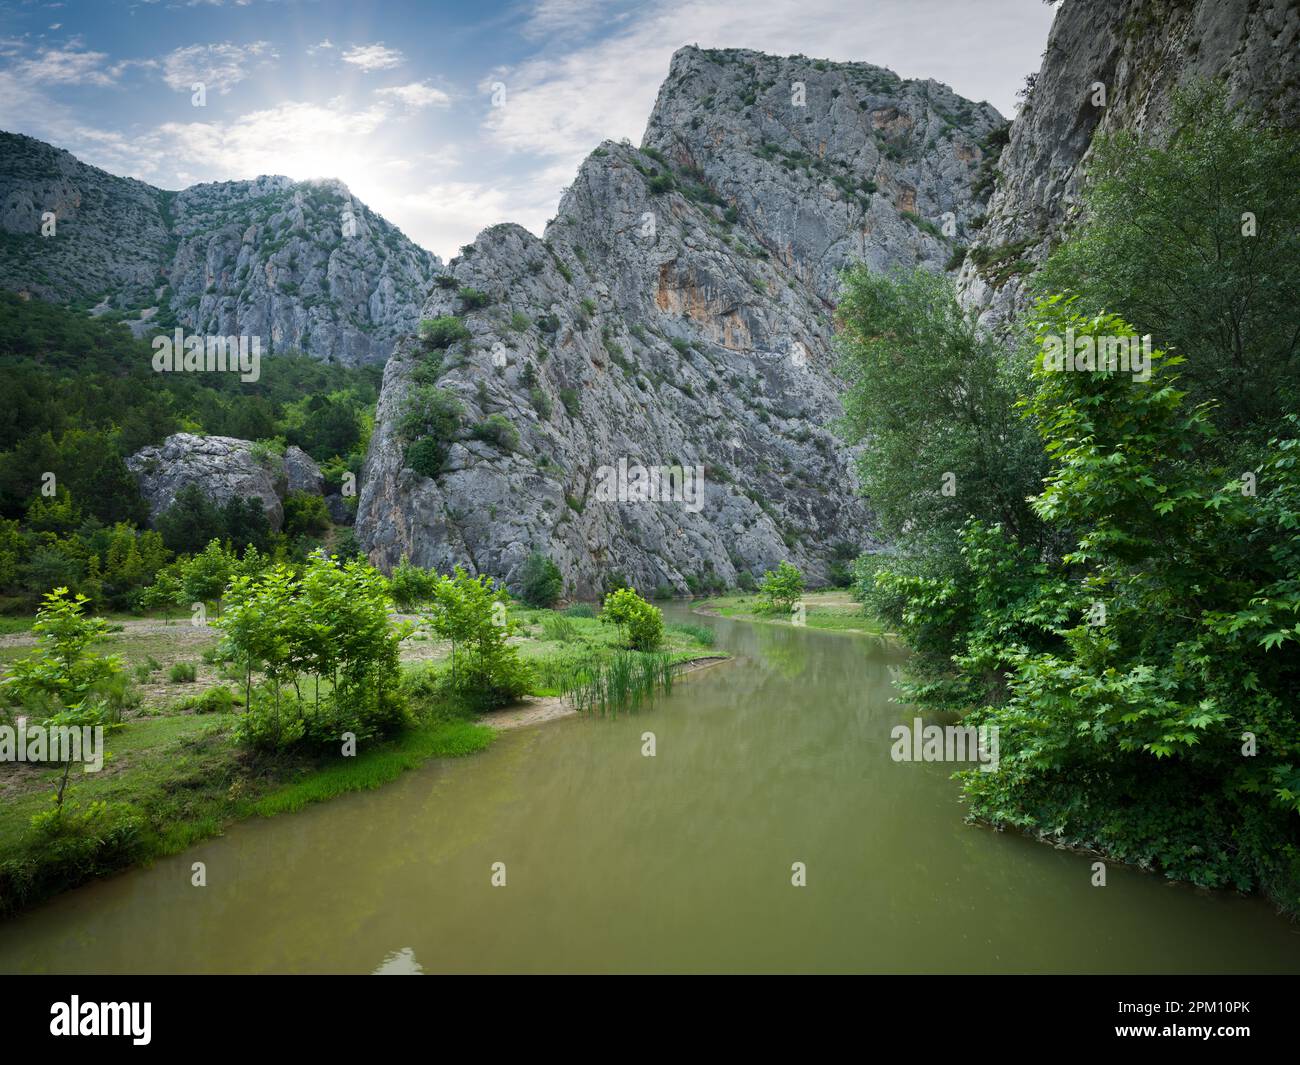 Kazankaya Canyon (Kazankaya Valley). Touristische natürliche Schluchten der Türkei. Aydincik, Yozgat, Türkei Stockfoto